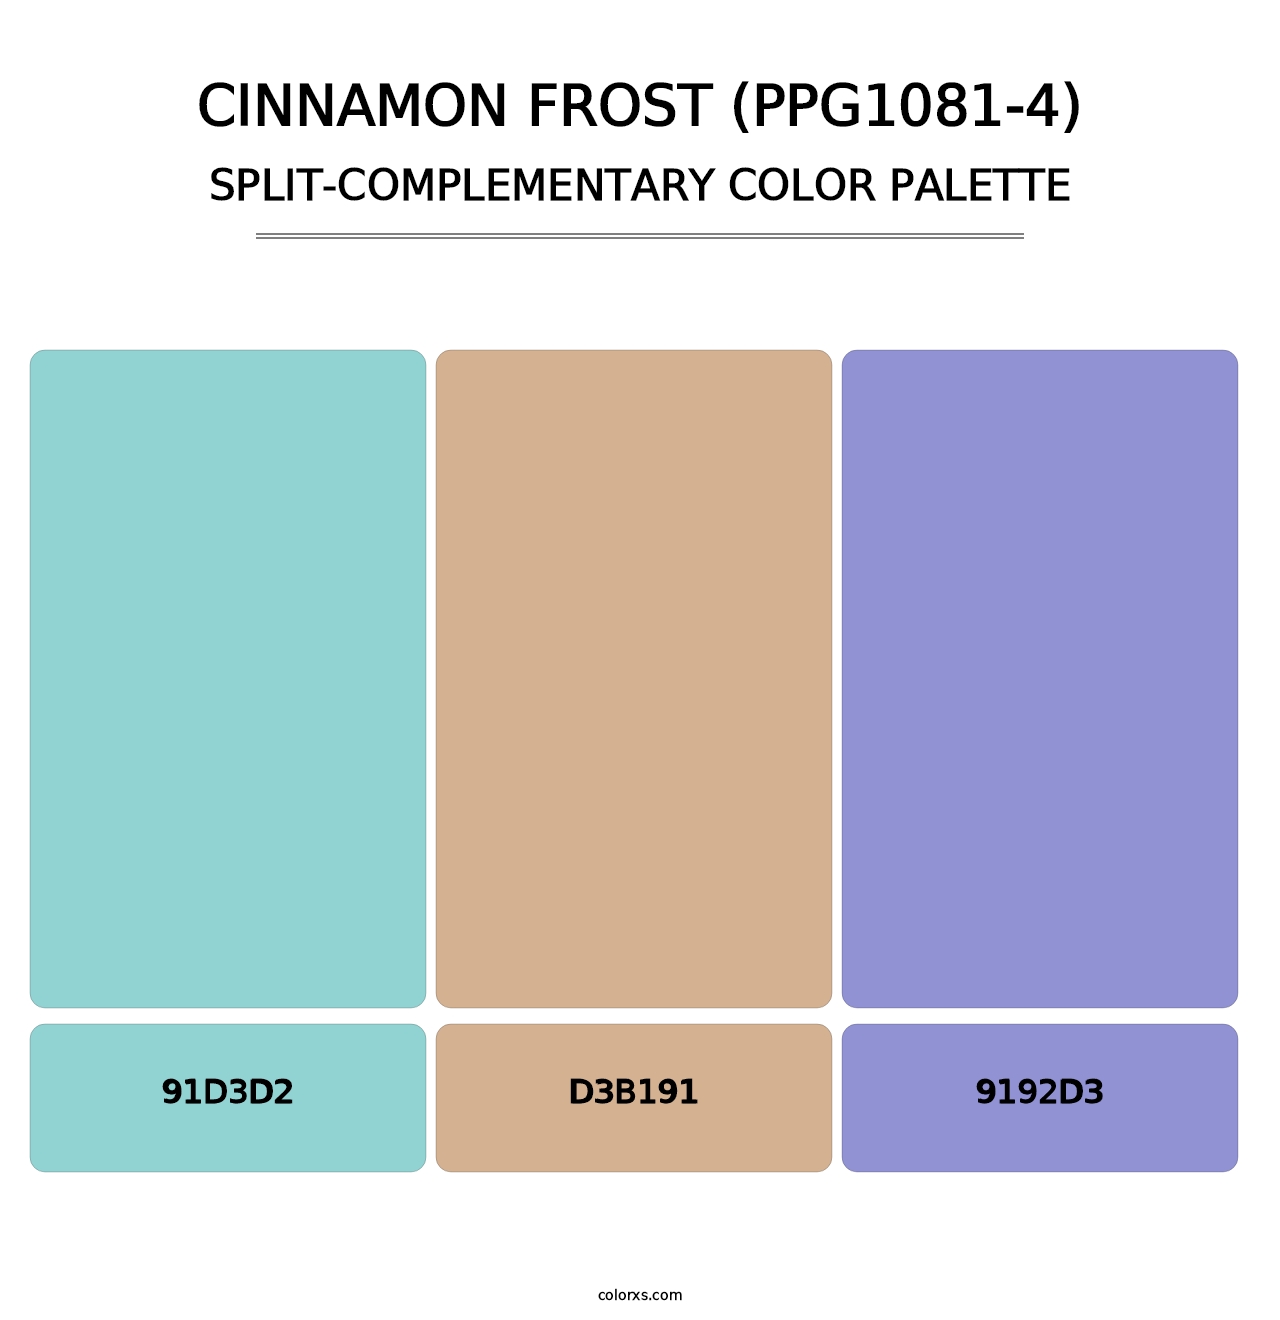 Cinnamon Frost (PPG1081-4) - Split-Complementary Color Palette